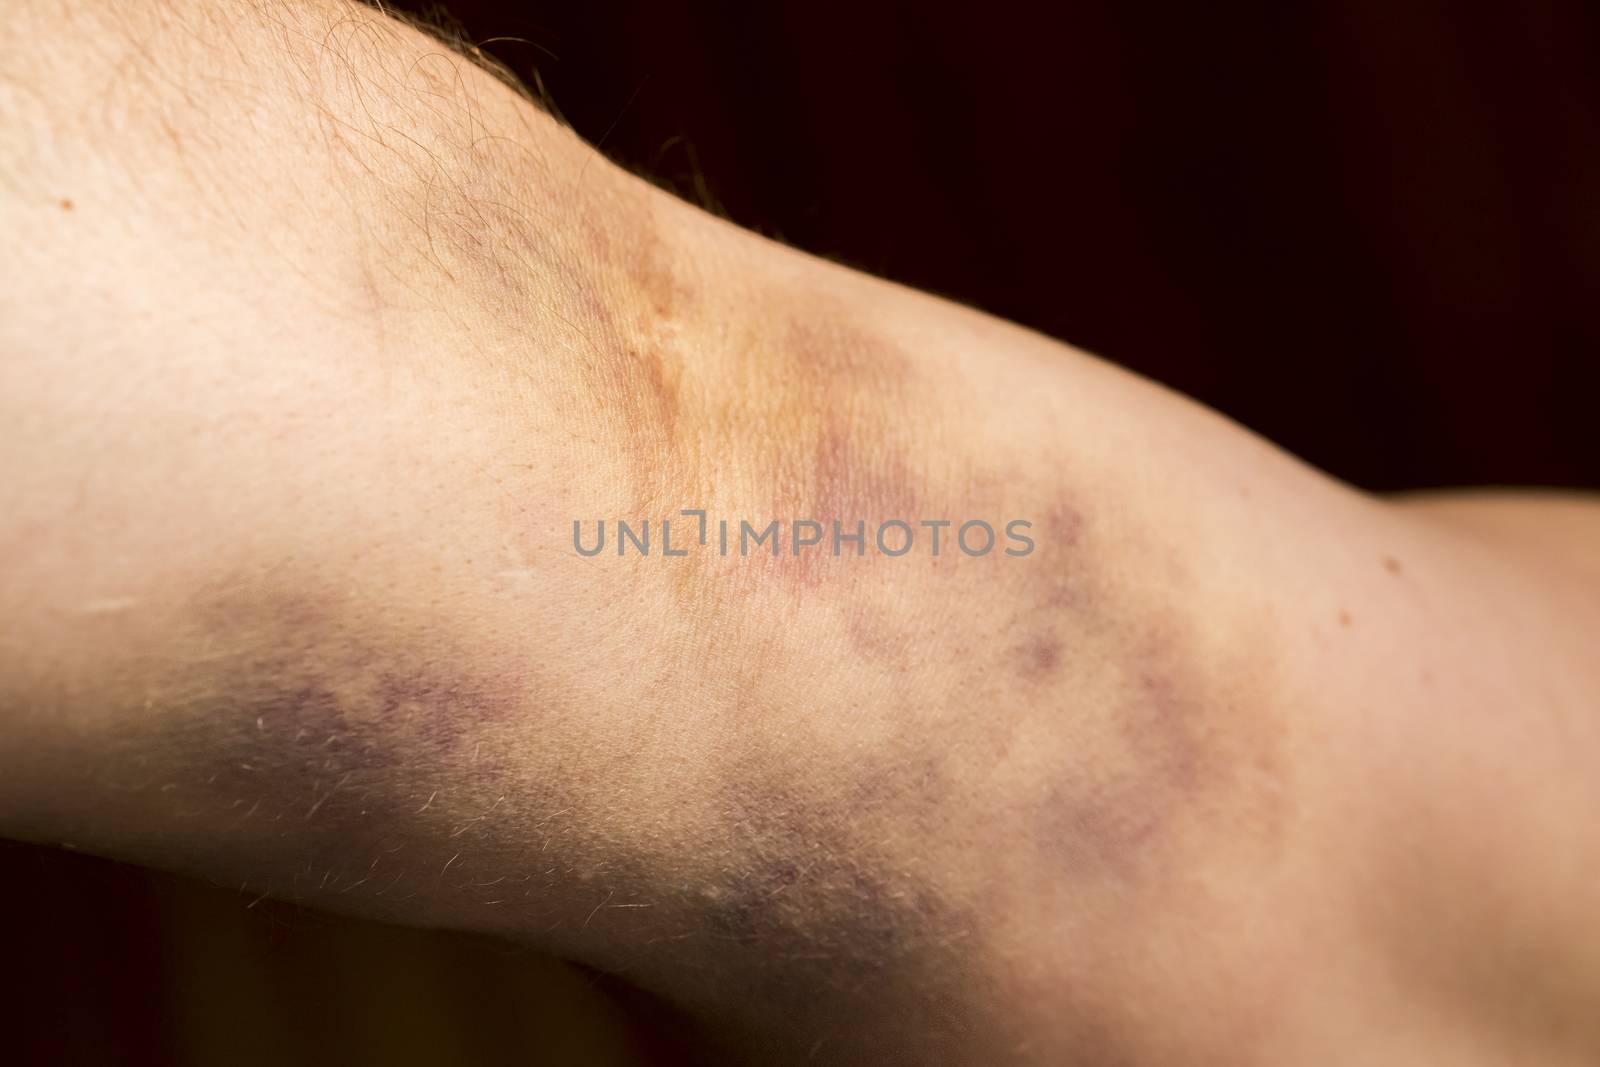 large hematoma on human arm by CatherineL-Prod